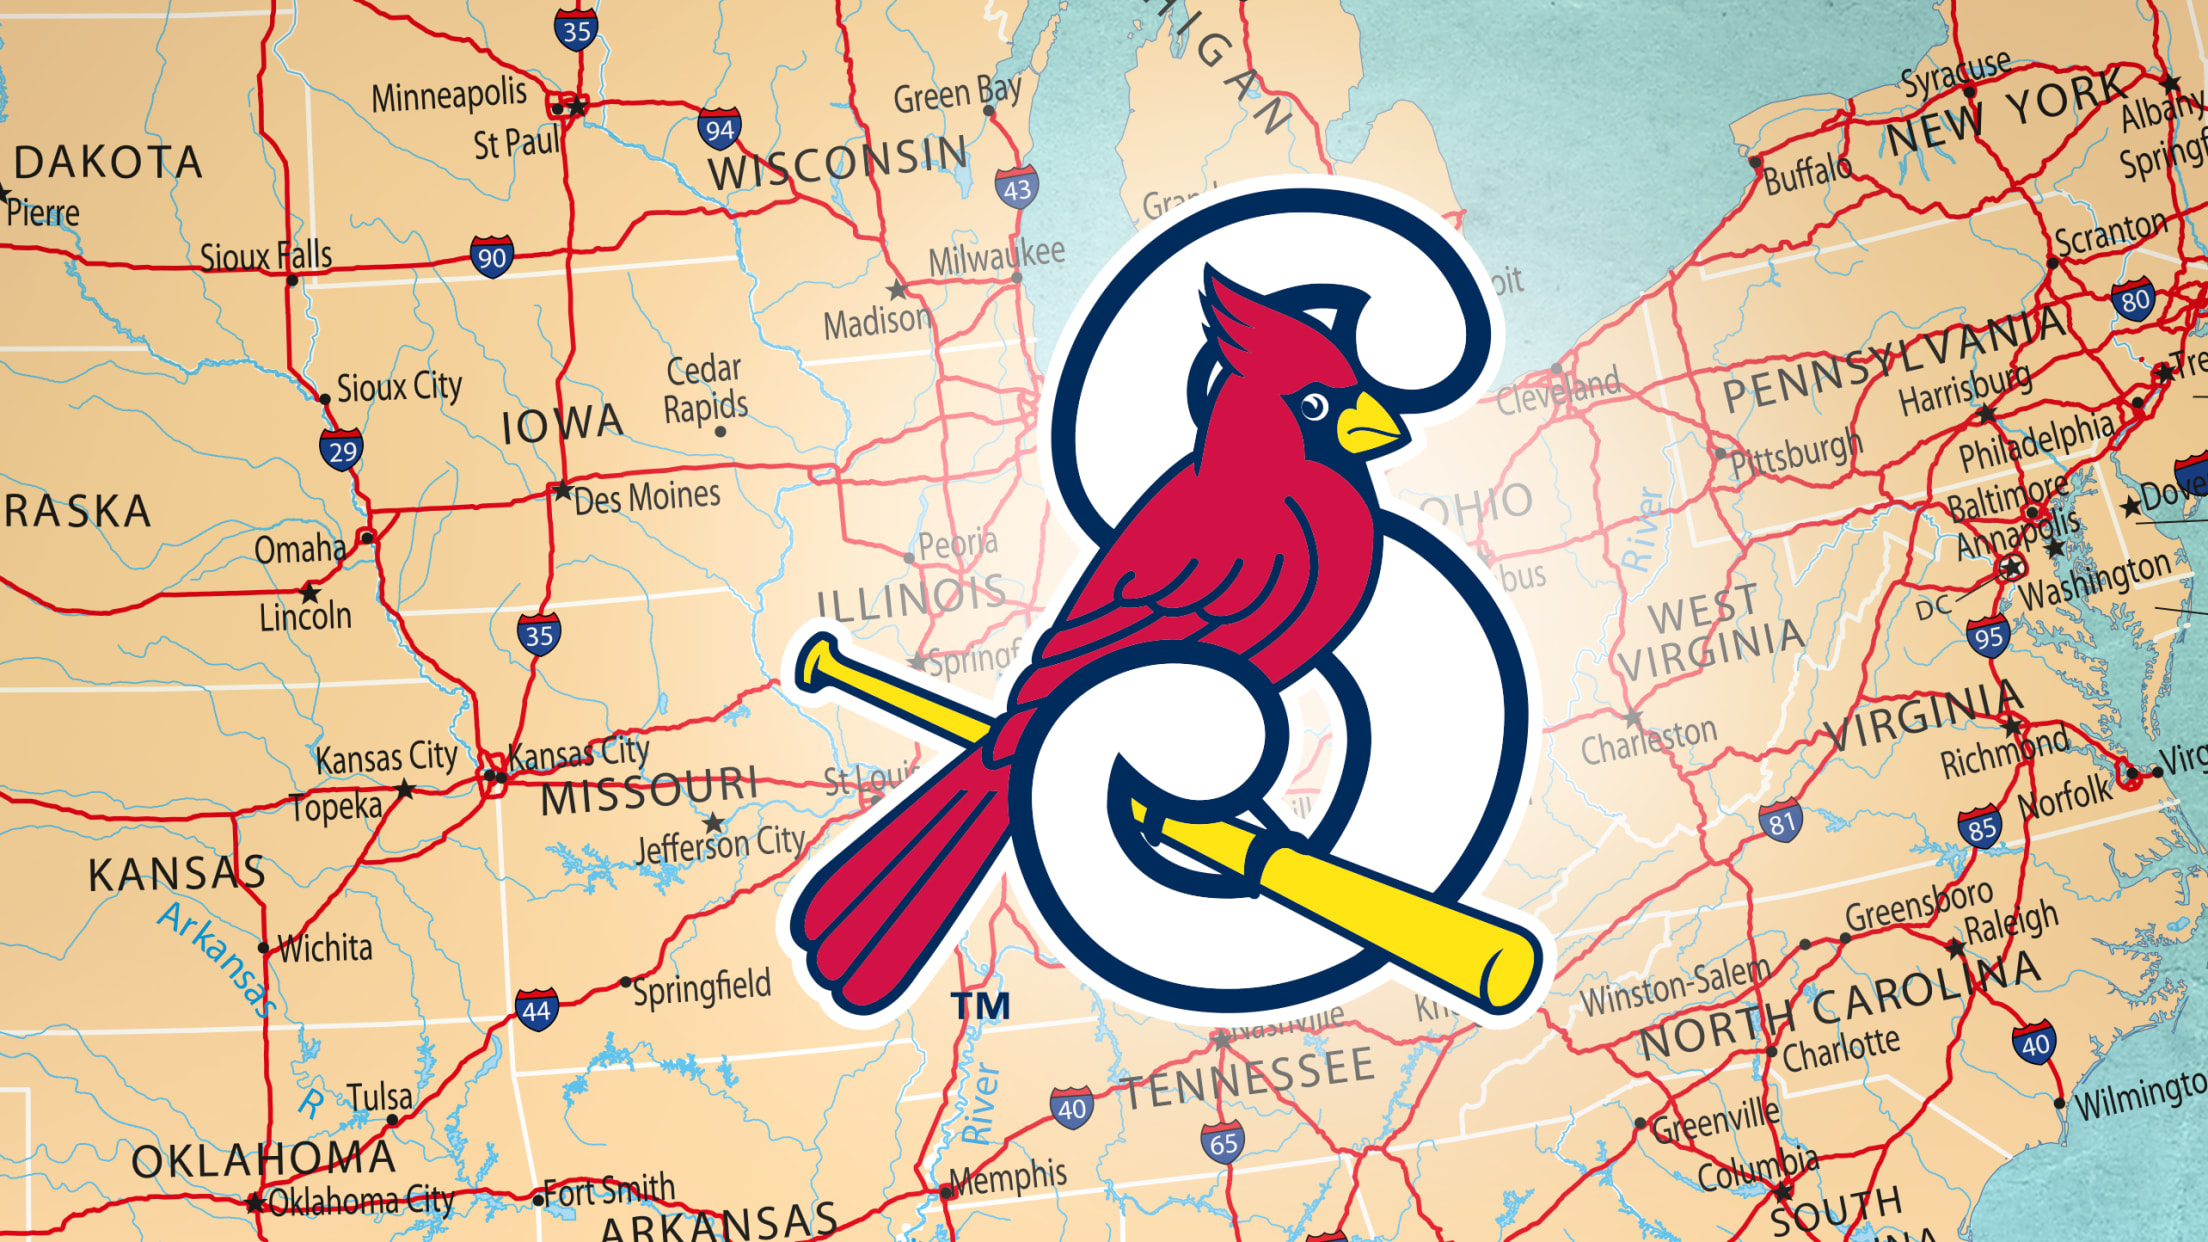 2022 Springfield Cardinals SINGLE CARDS - CHOOSE YOUR PLAYER